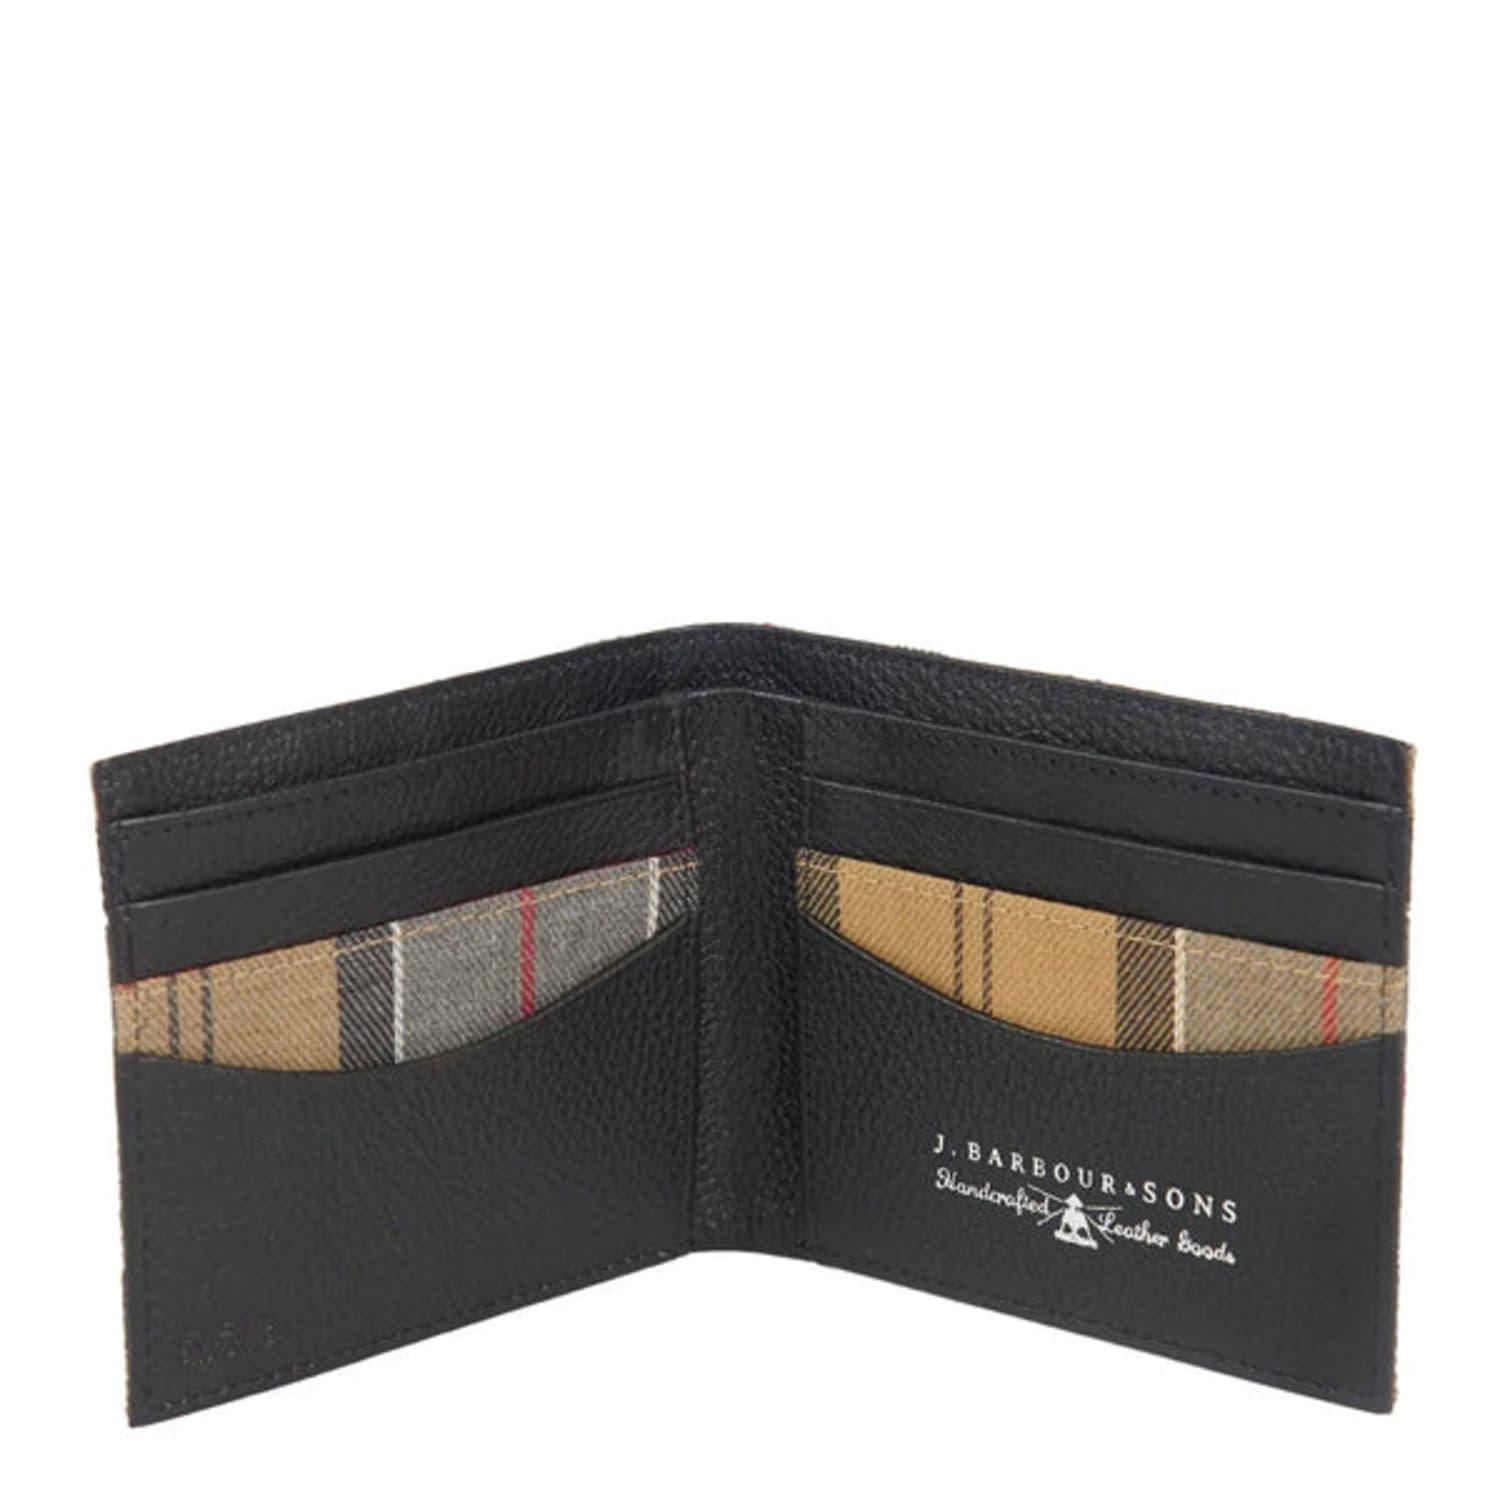 Barbour Leather Dress Tartan Wallet in Metallic for Men - Save 33% | Lyst